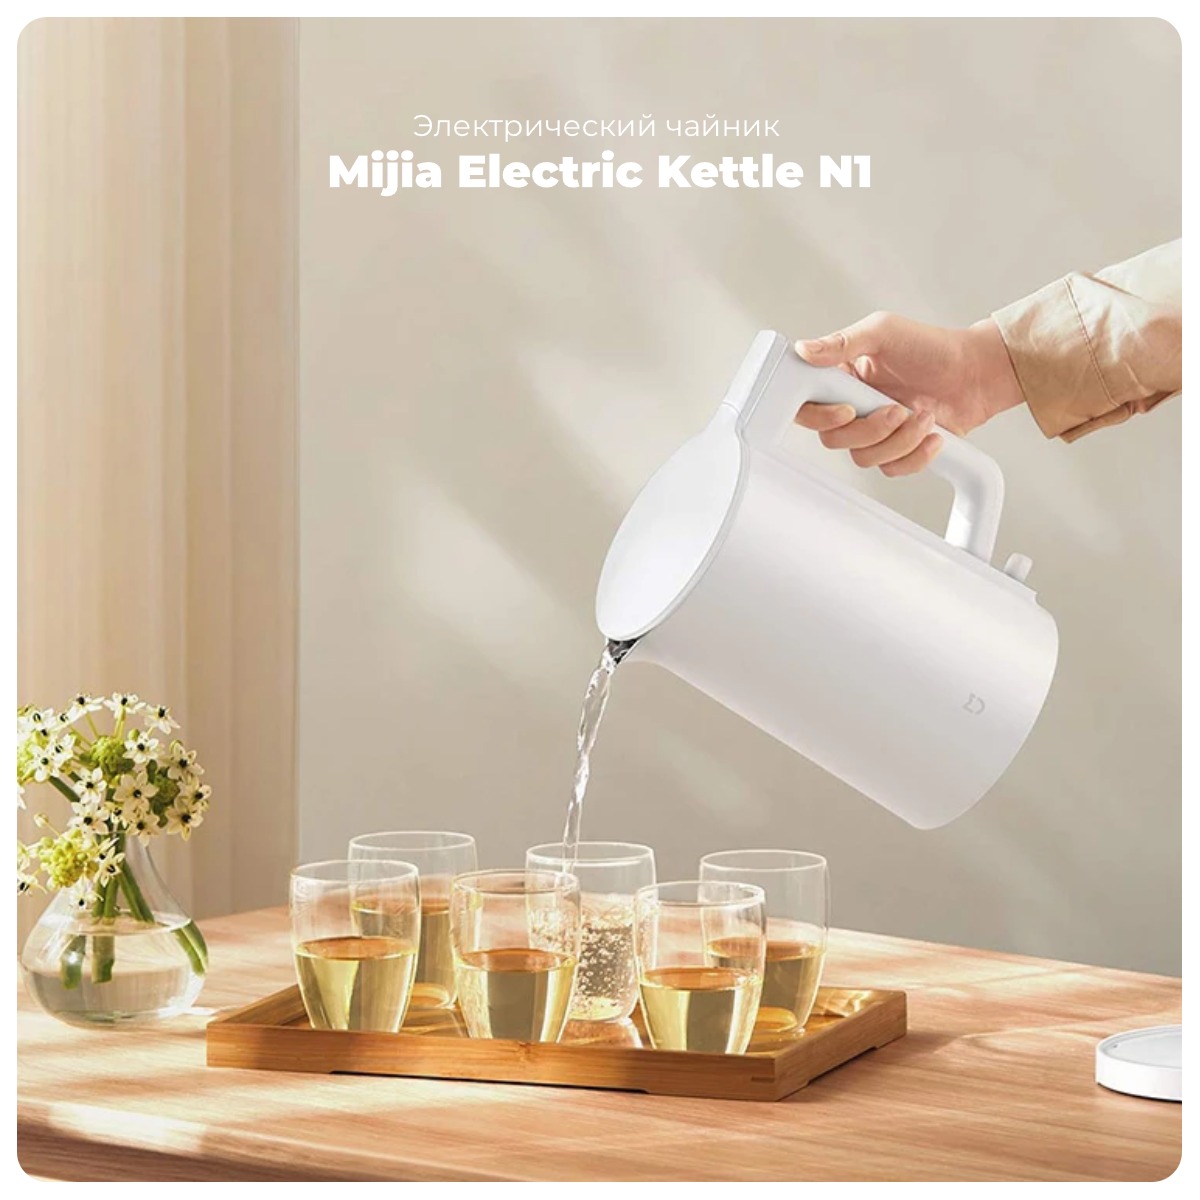 Mijia-Electric-Kettle-N1-01